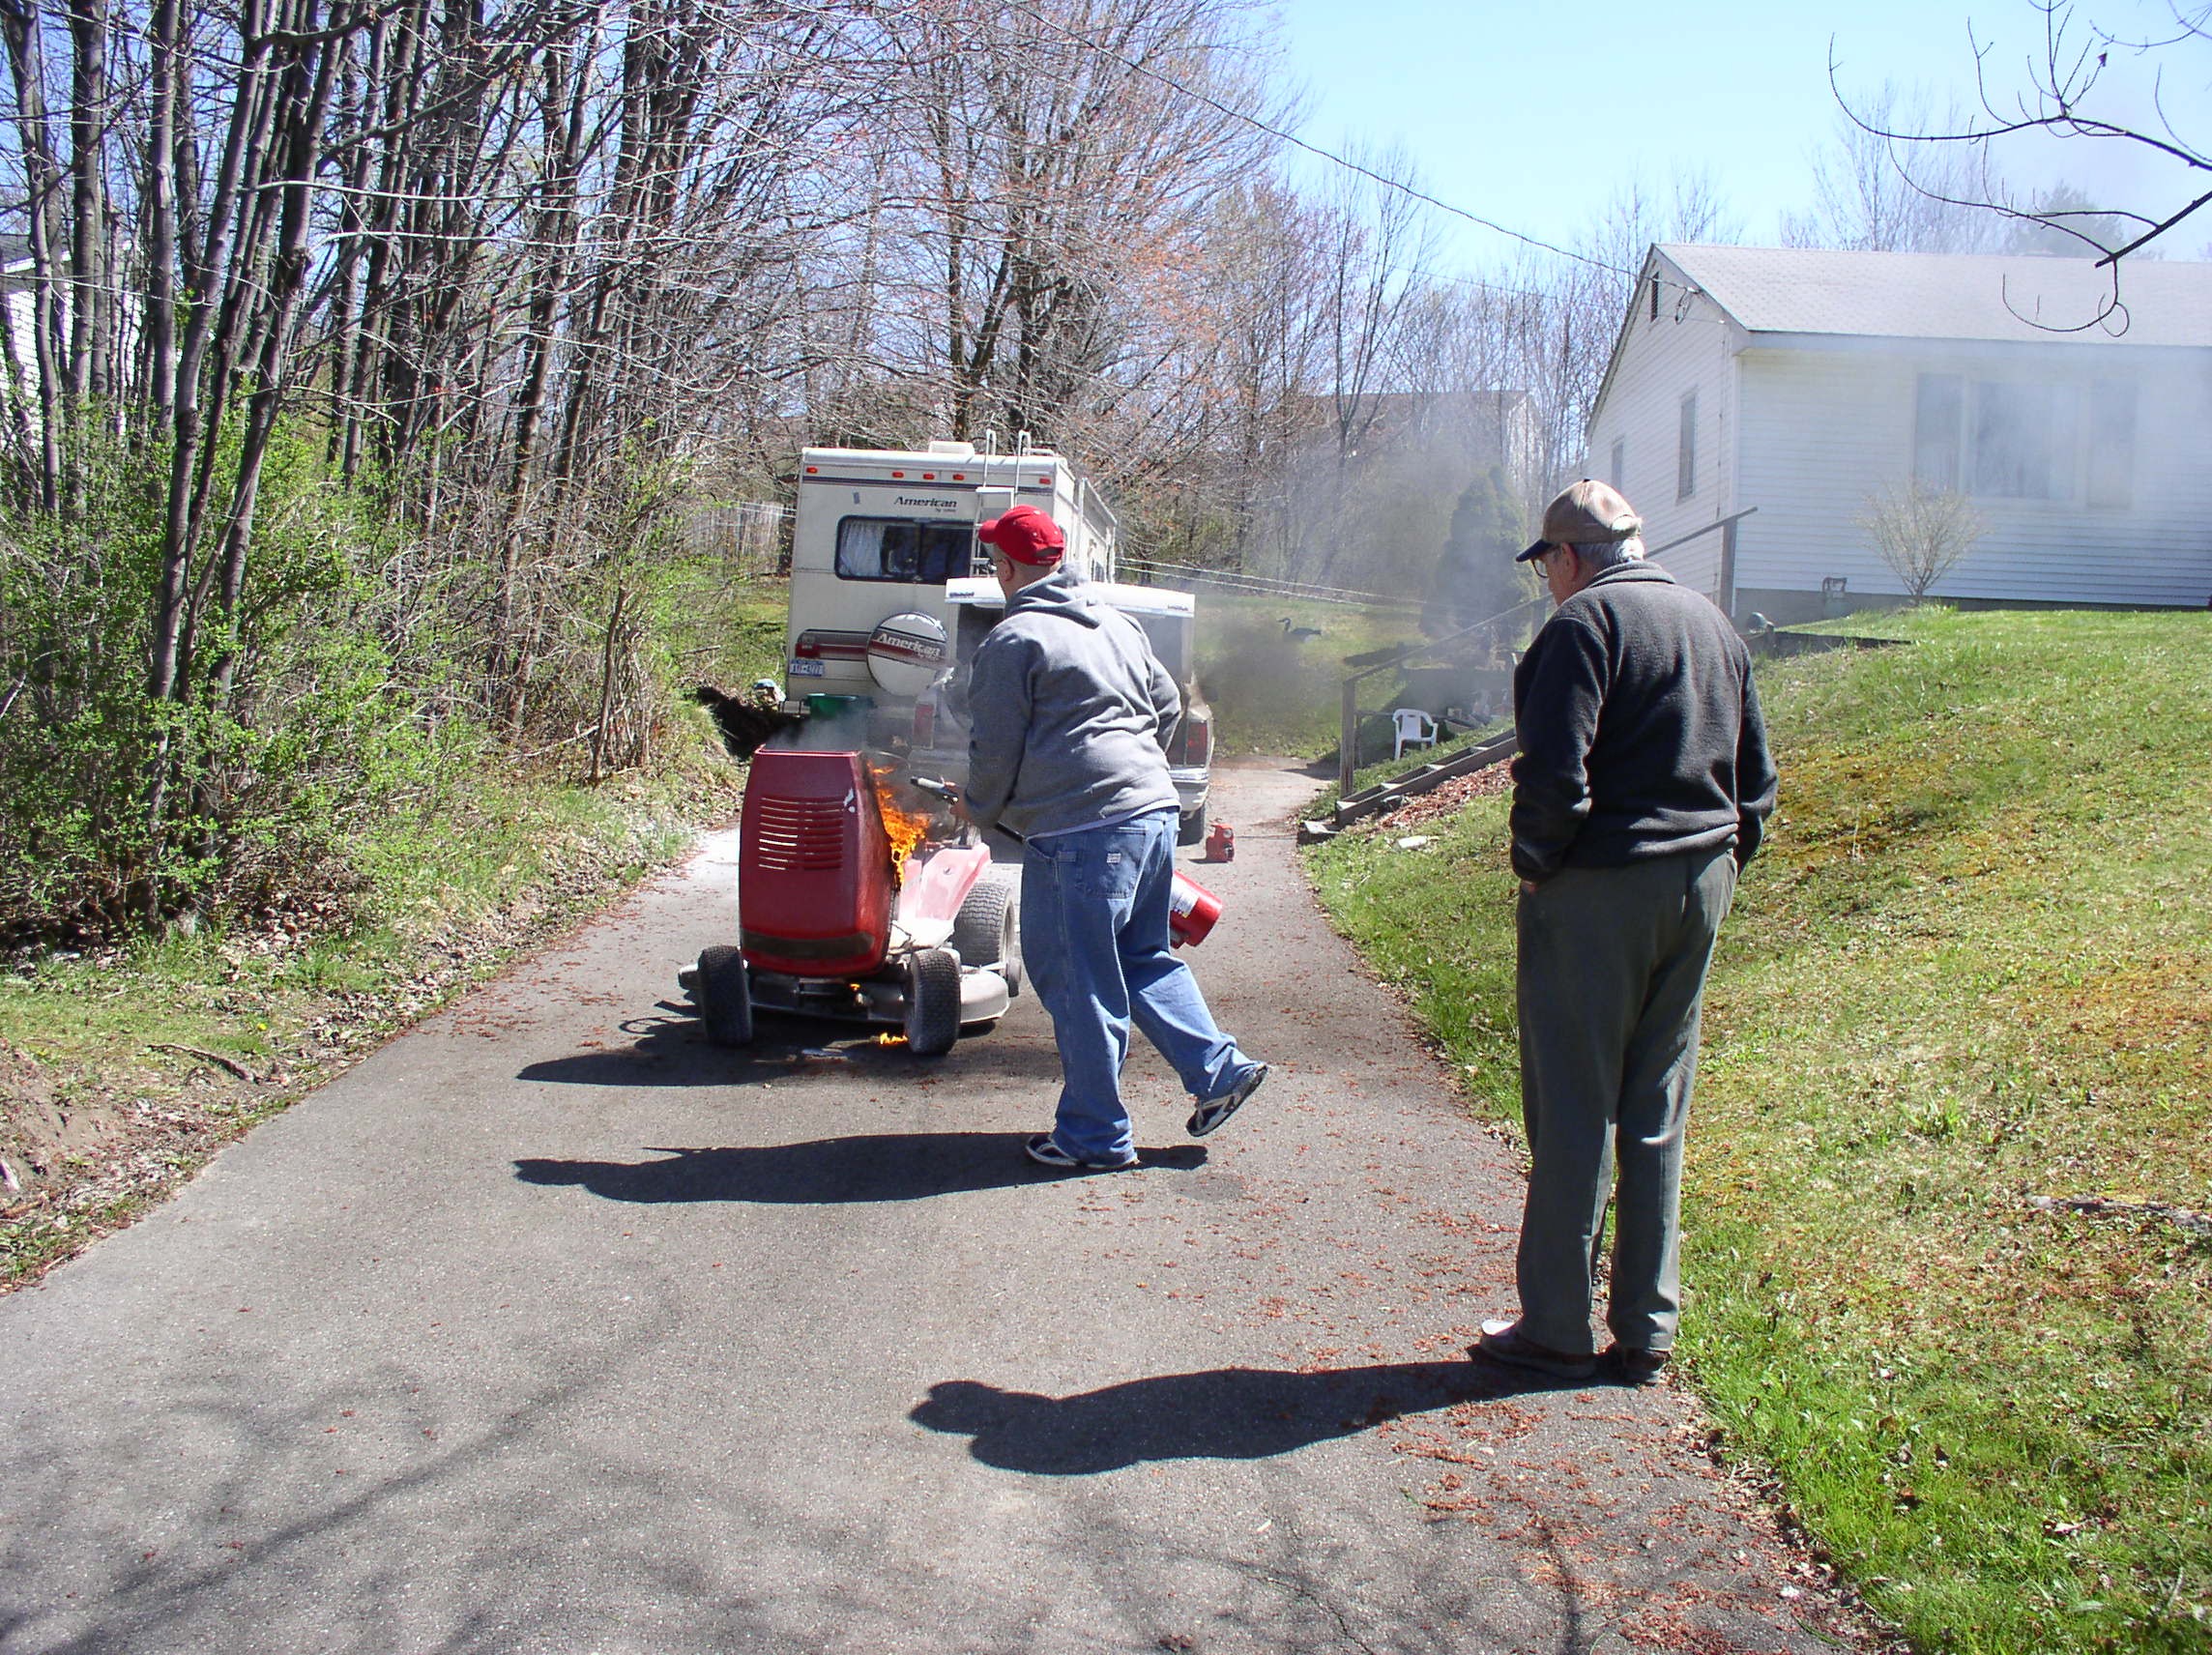 04-28-04  Response - Fire - Mower